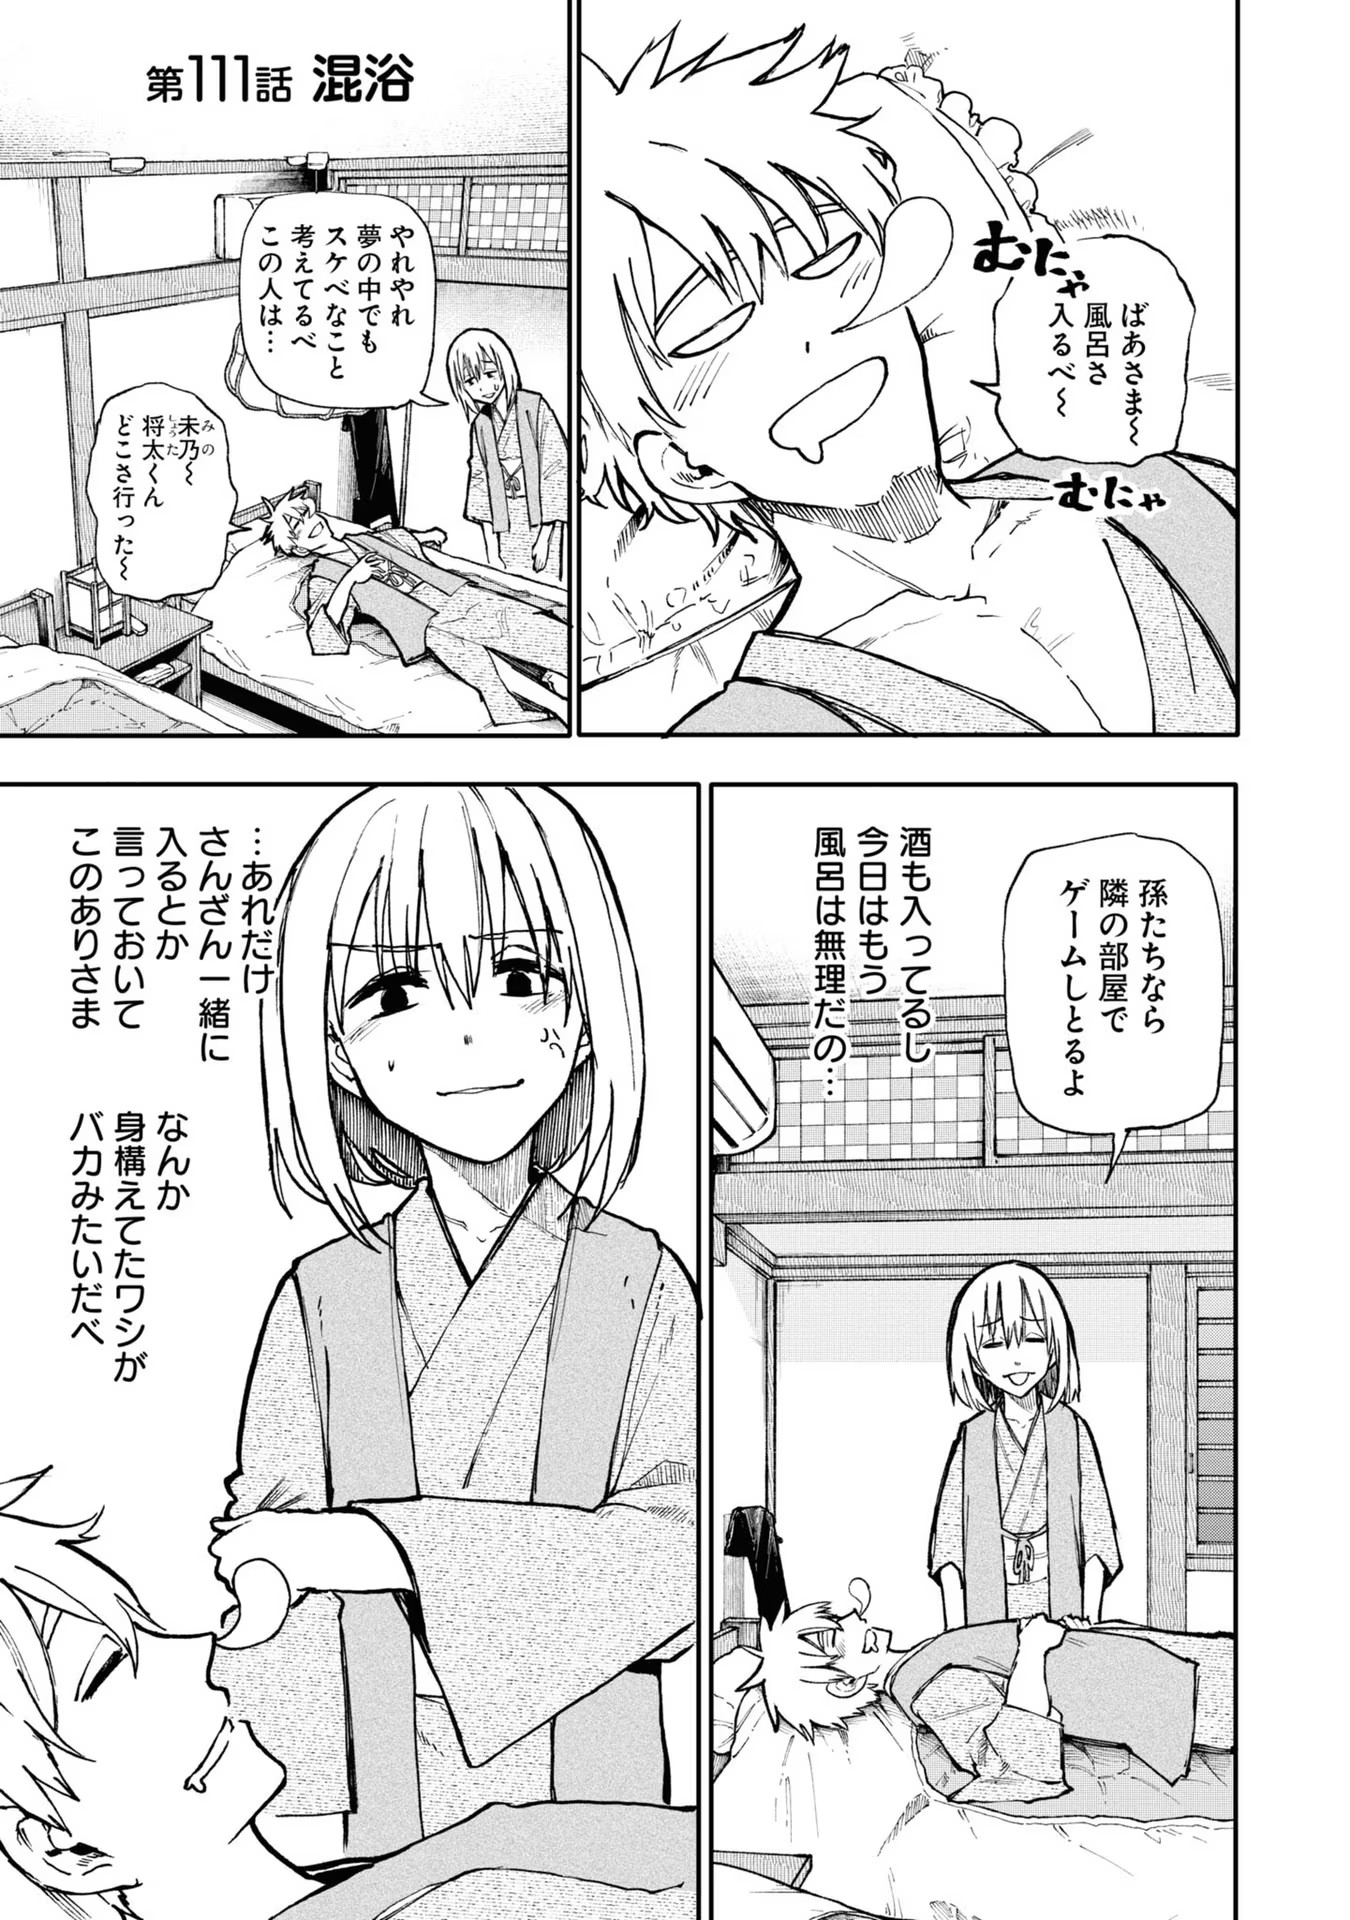 Ojii-san to Obaa-san ga Wakigaetta Hanashi - Chapter 111 - Page 1